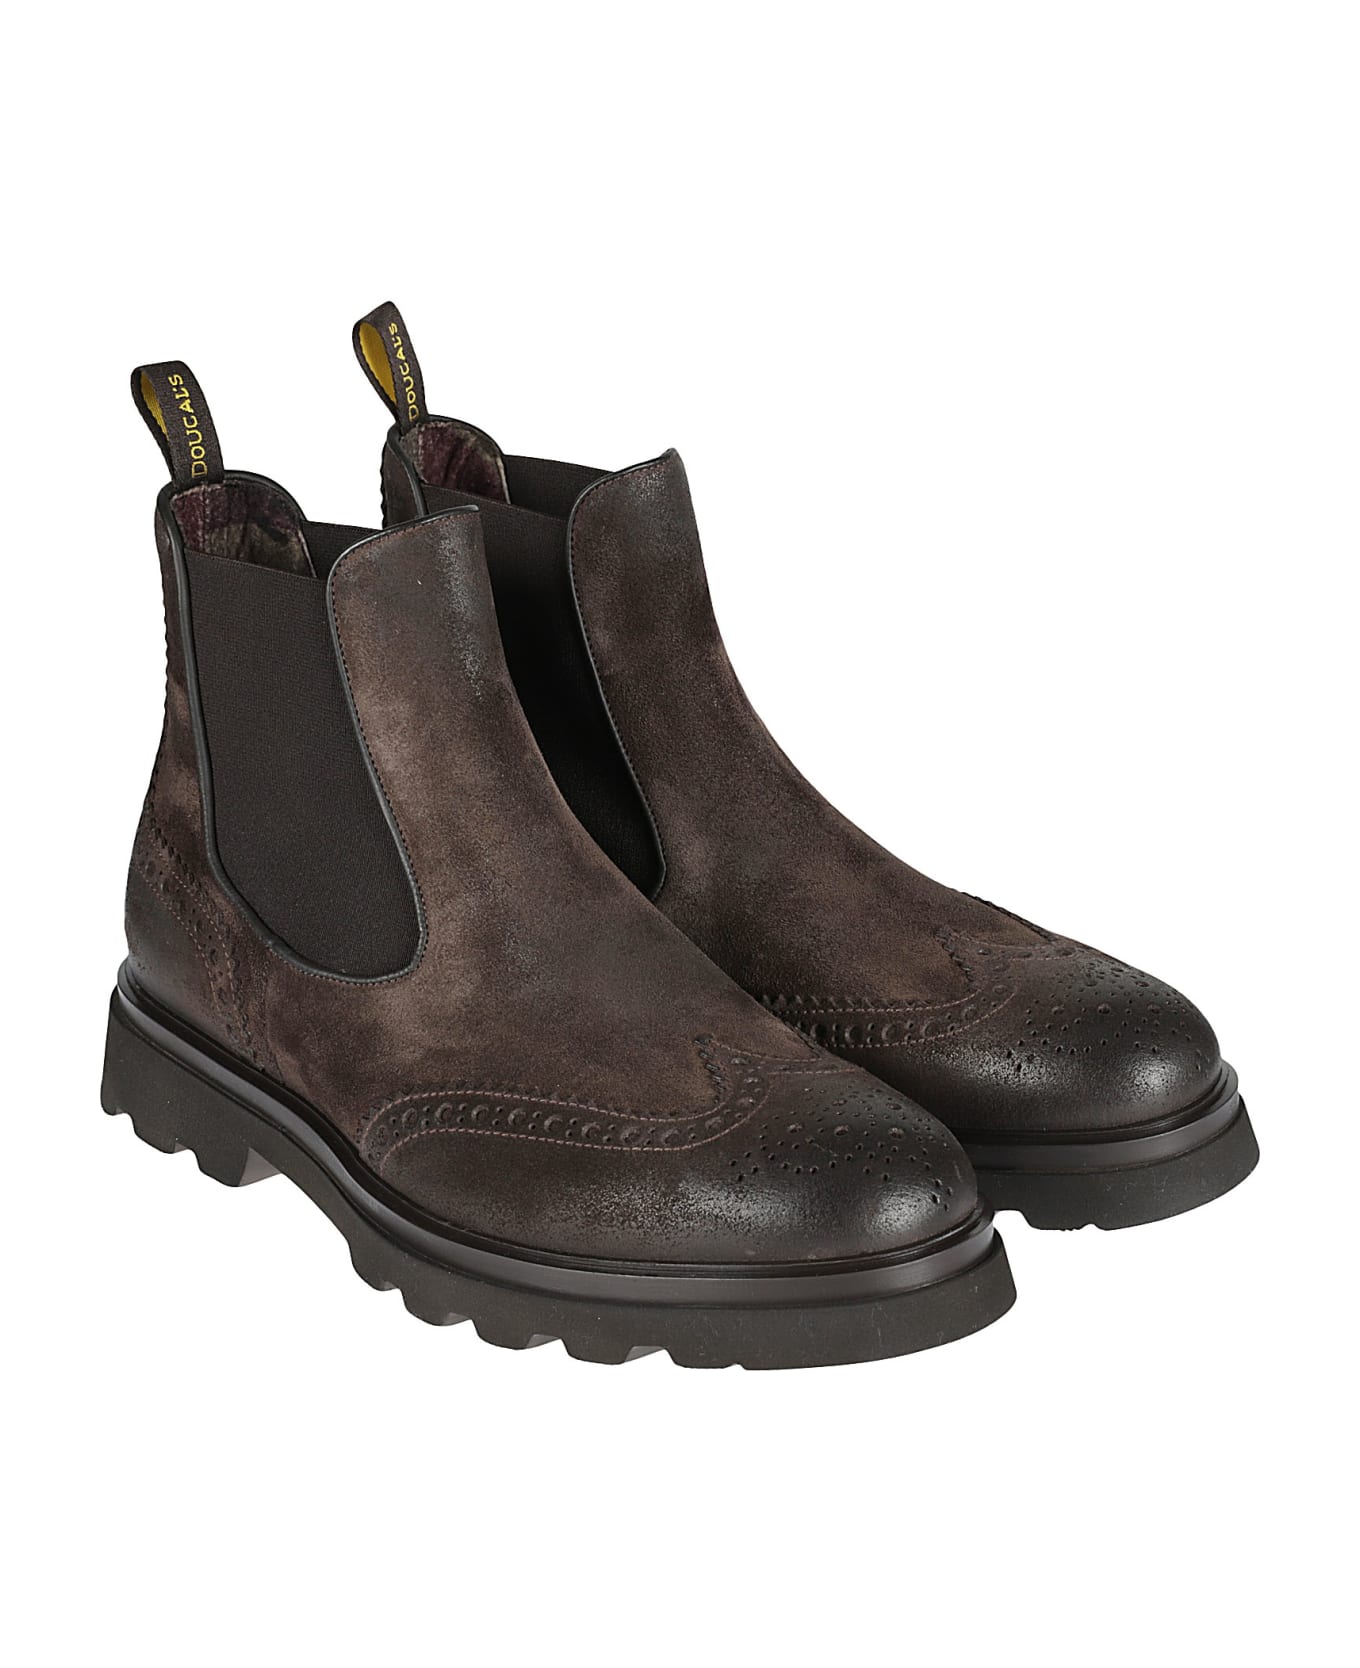 Doucal's Coda Rondine Chelsea Boots - Testa Moro/fondo Testa Moro ブーツ